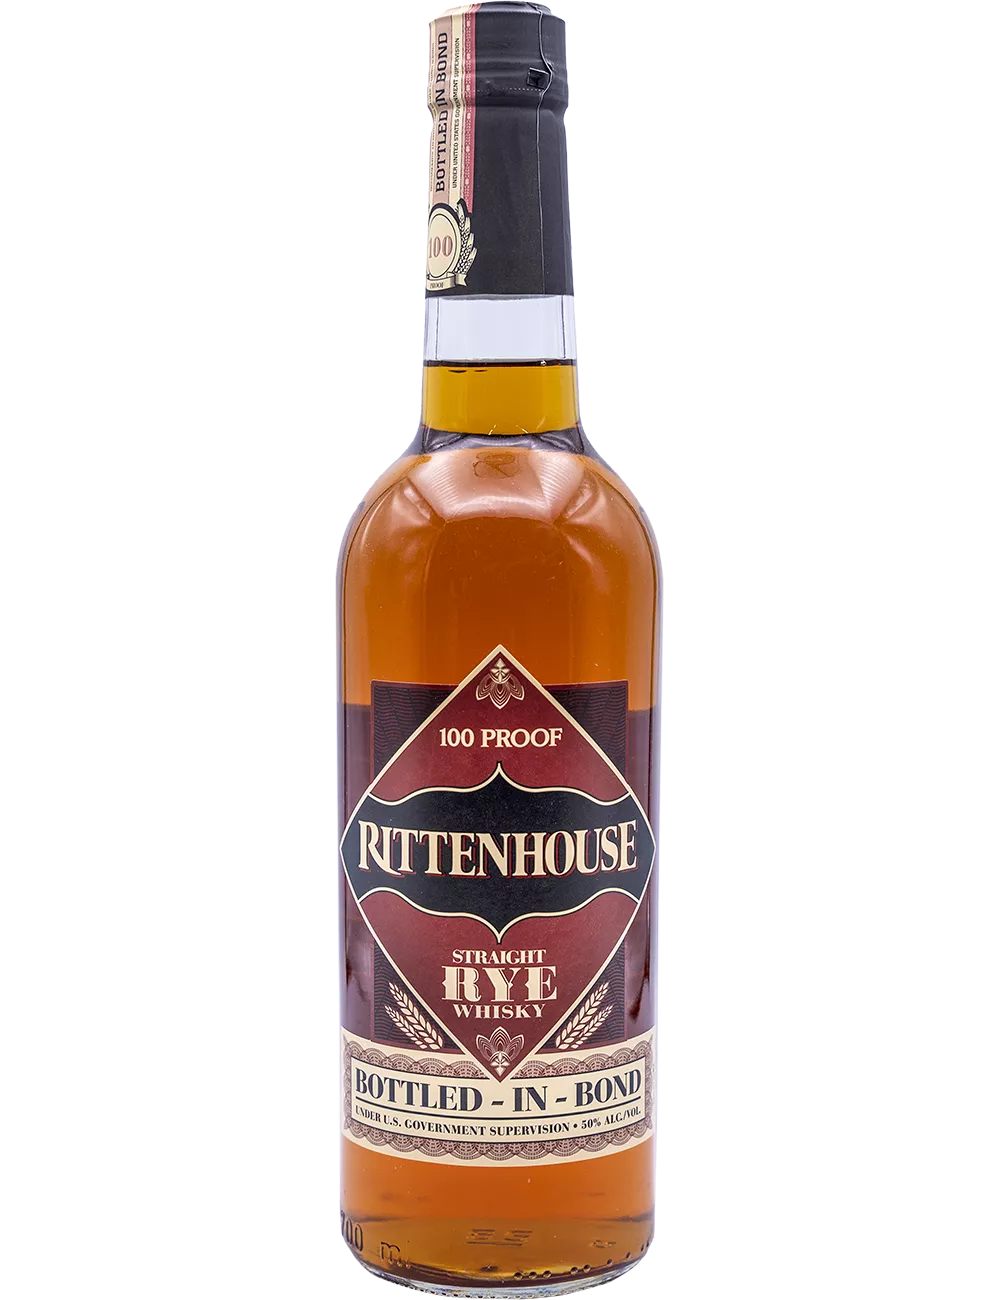 Rittenhouse - 100 Proof - Rye whisky